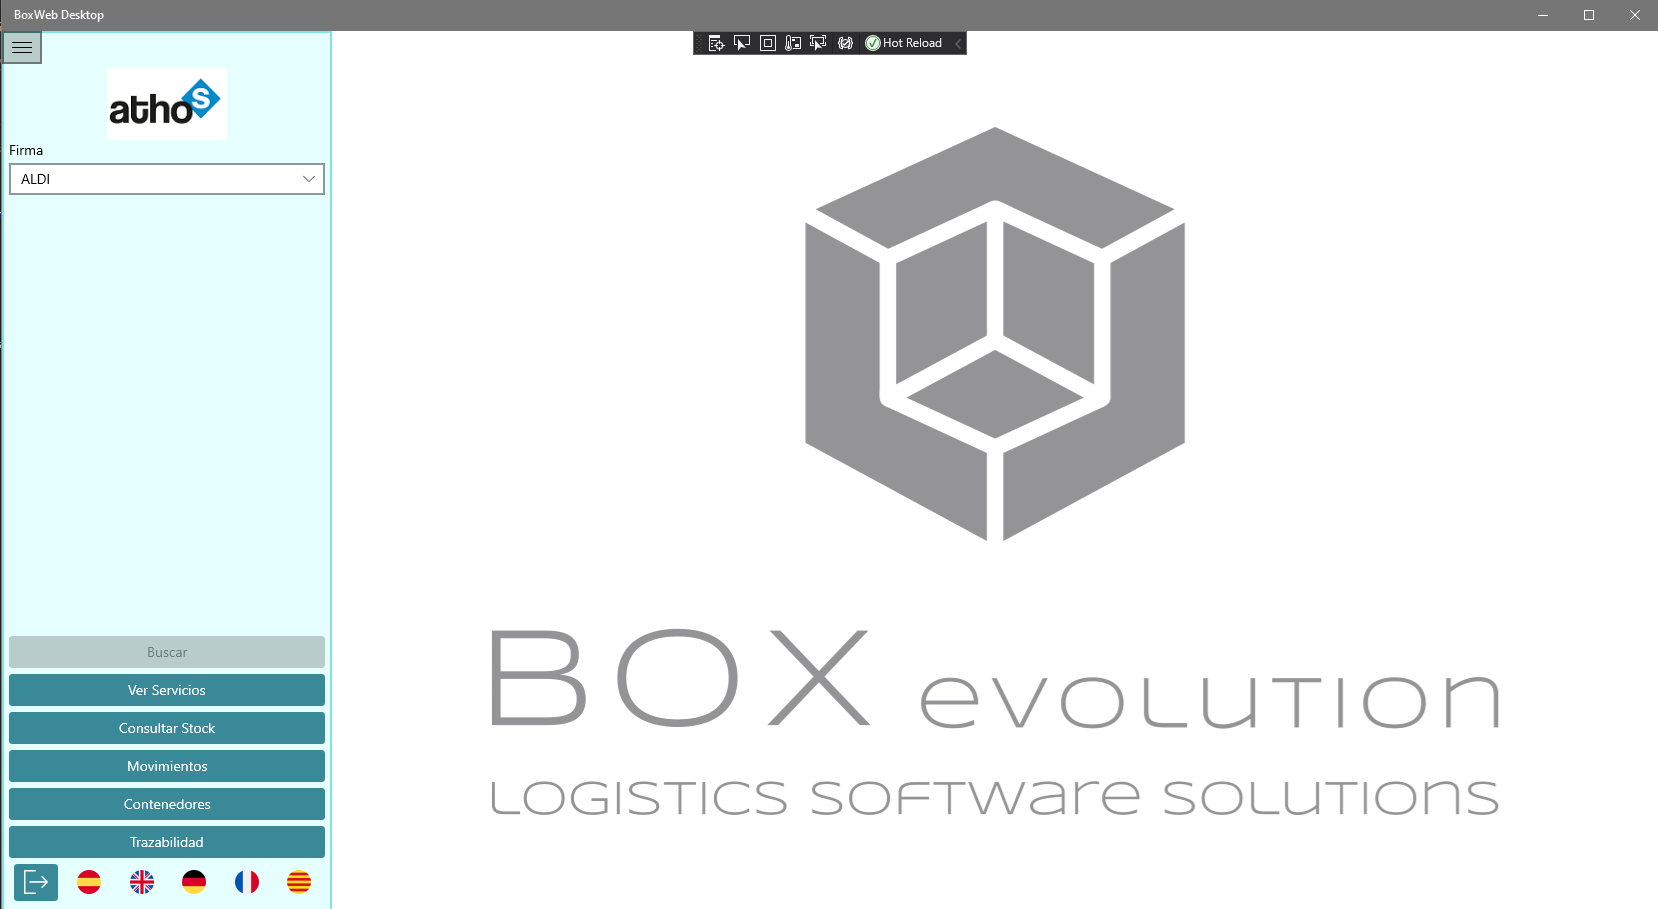 BoxWeb Desktop